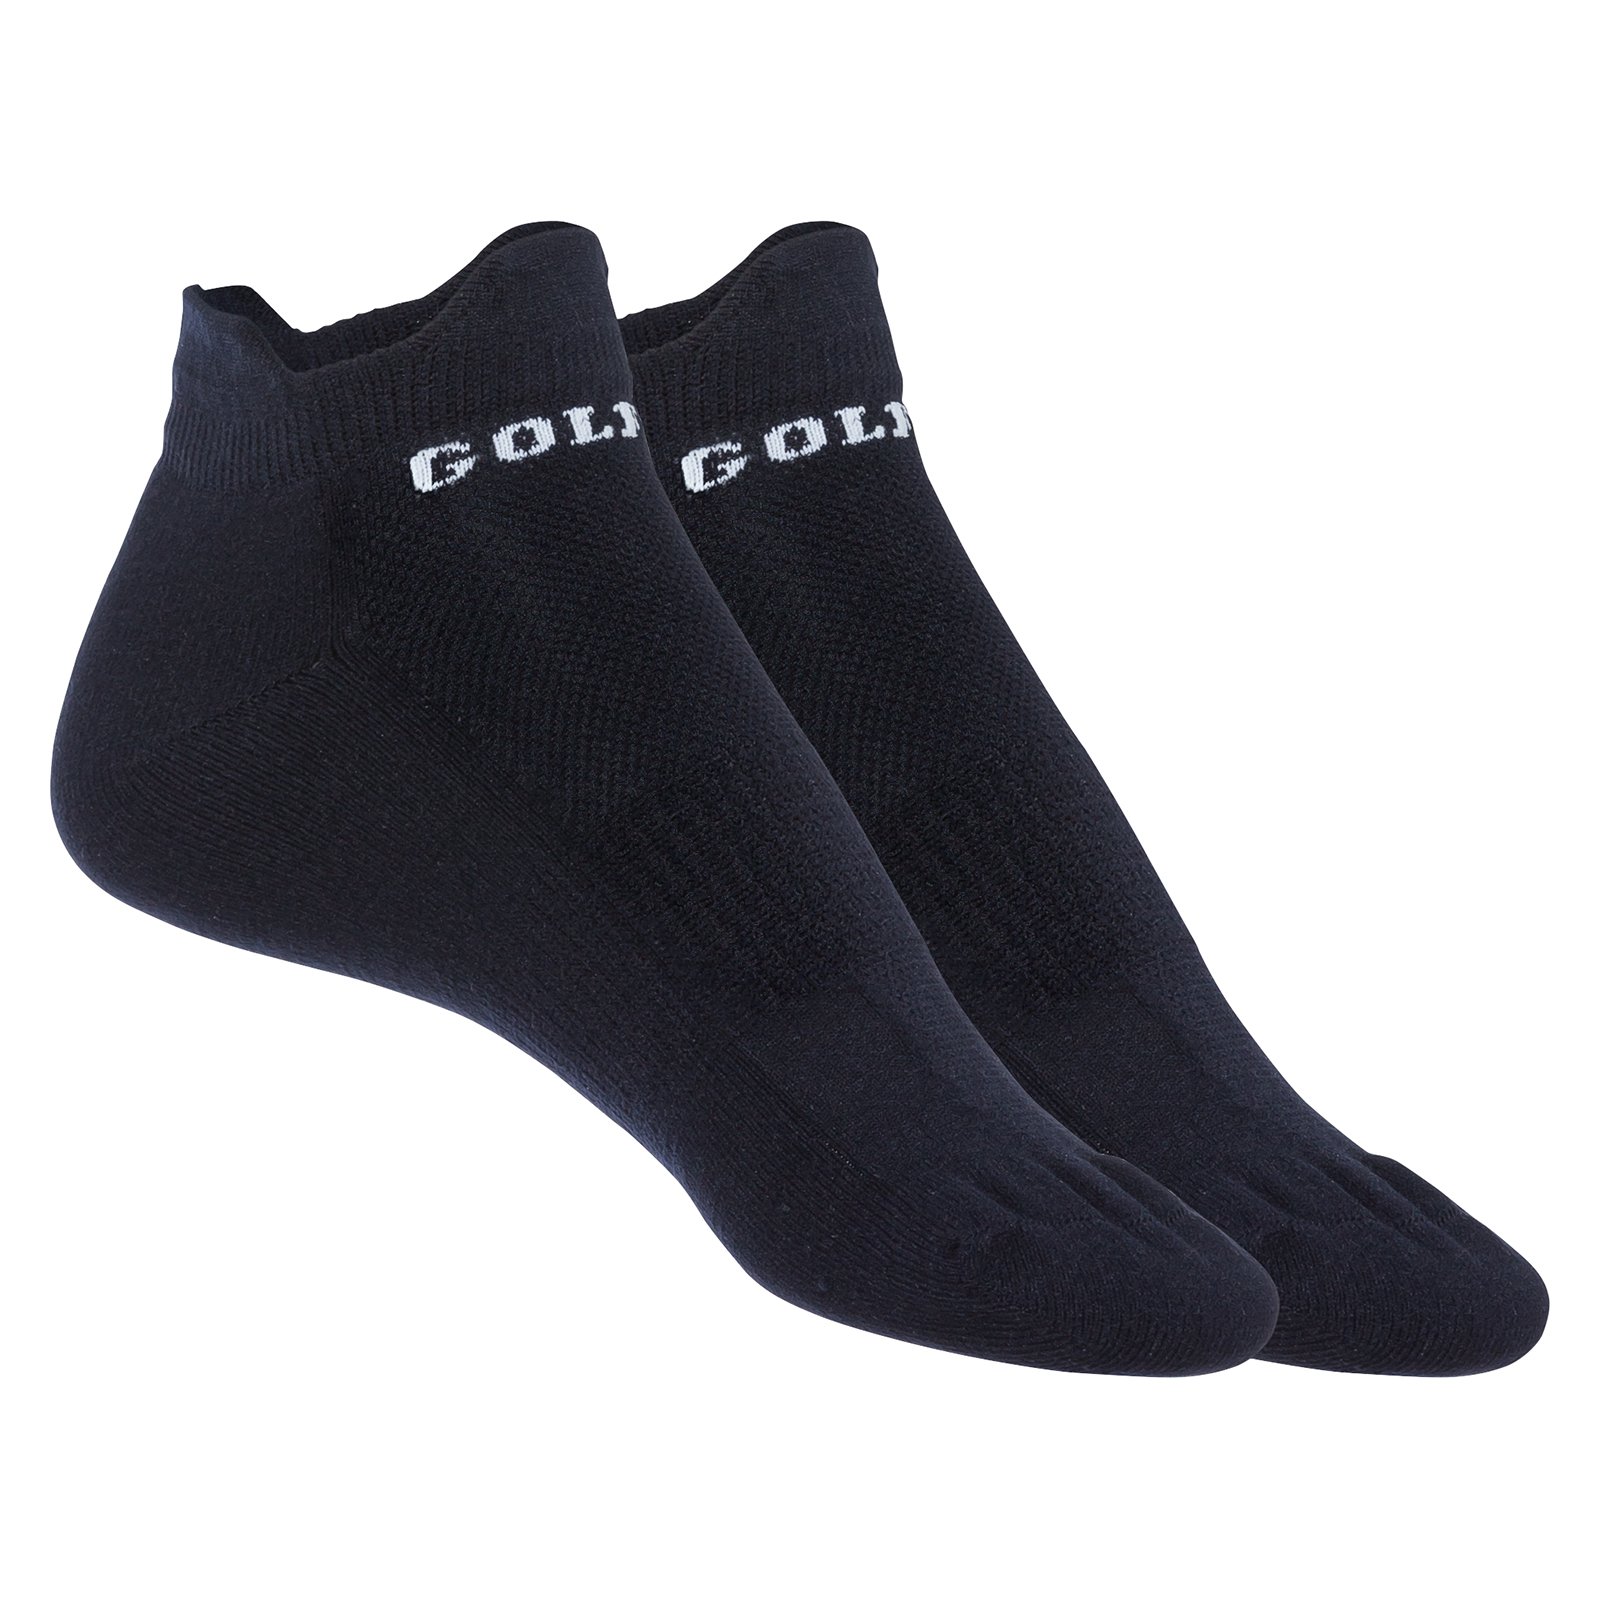 Men's cosy socks